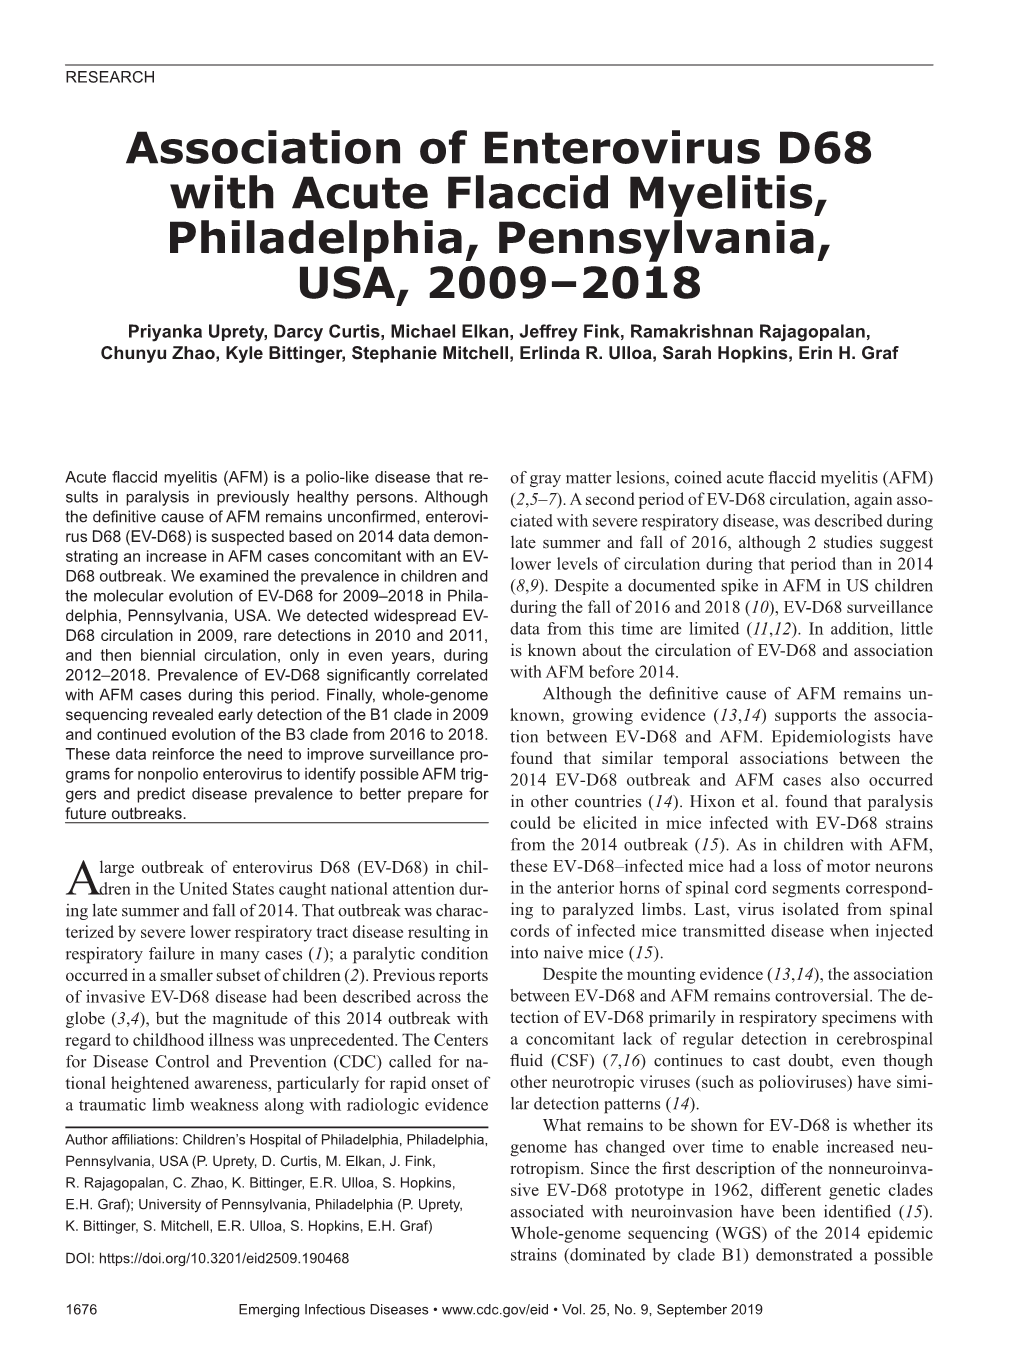 Association of Enterovirus D68 with Acute Flaccid Myelitis, Philadelphia